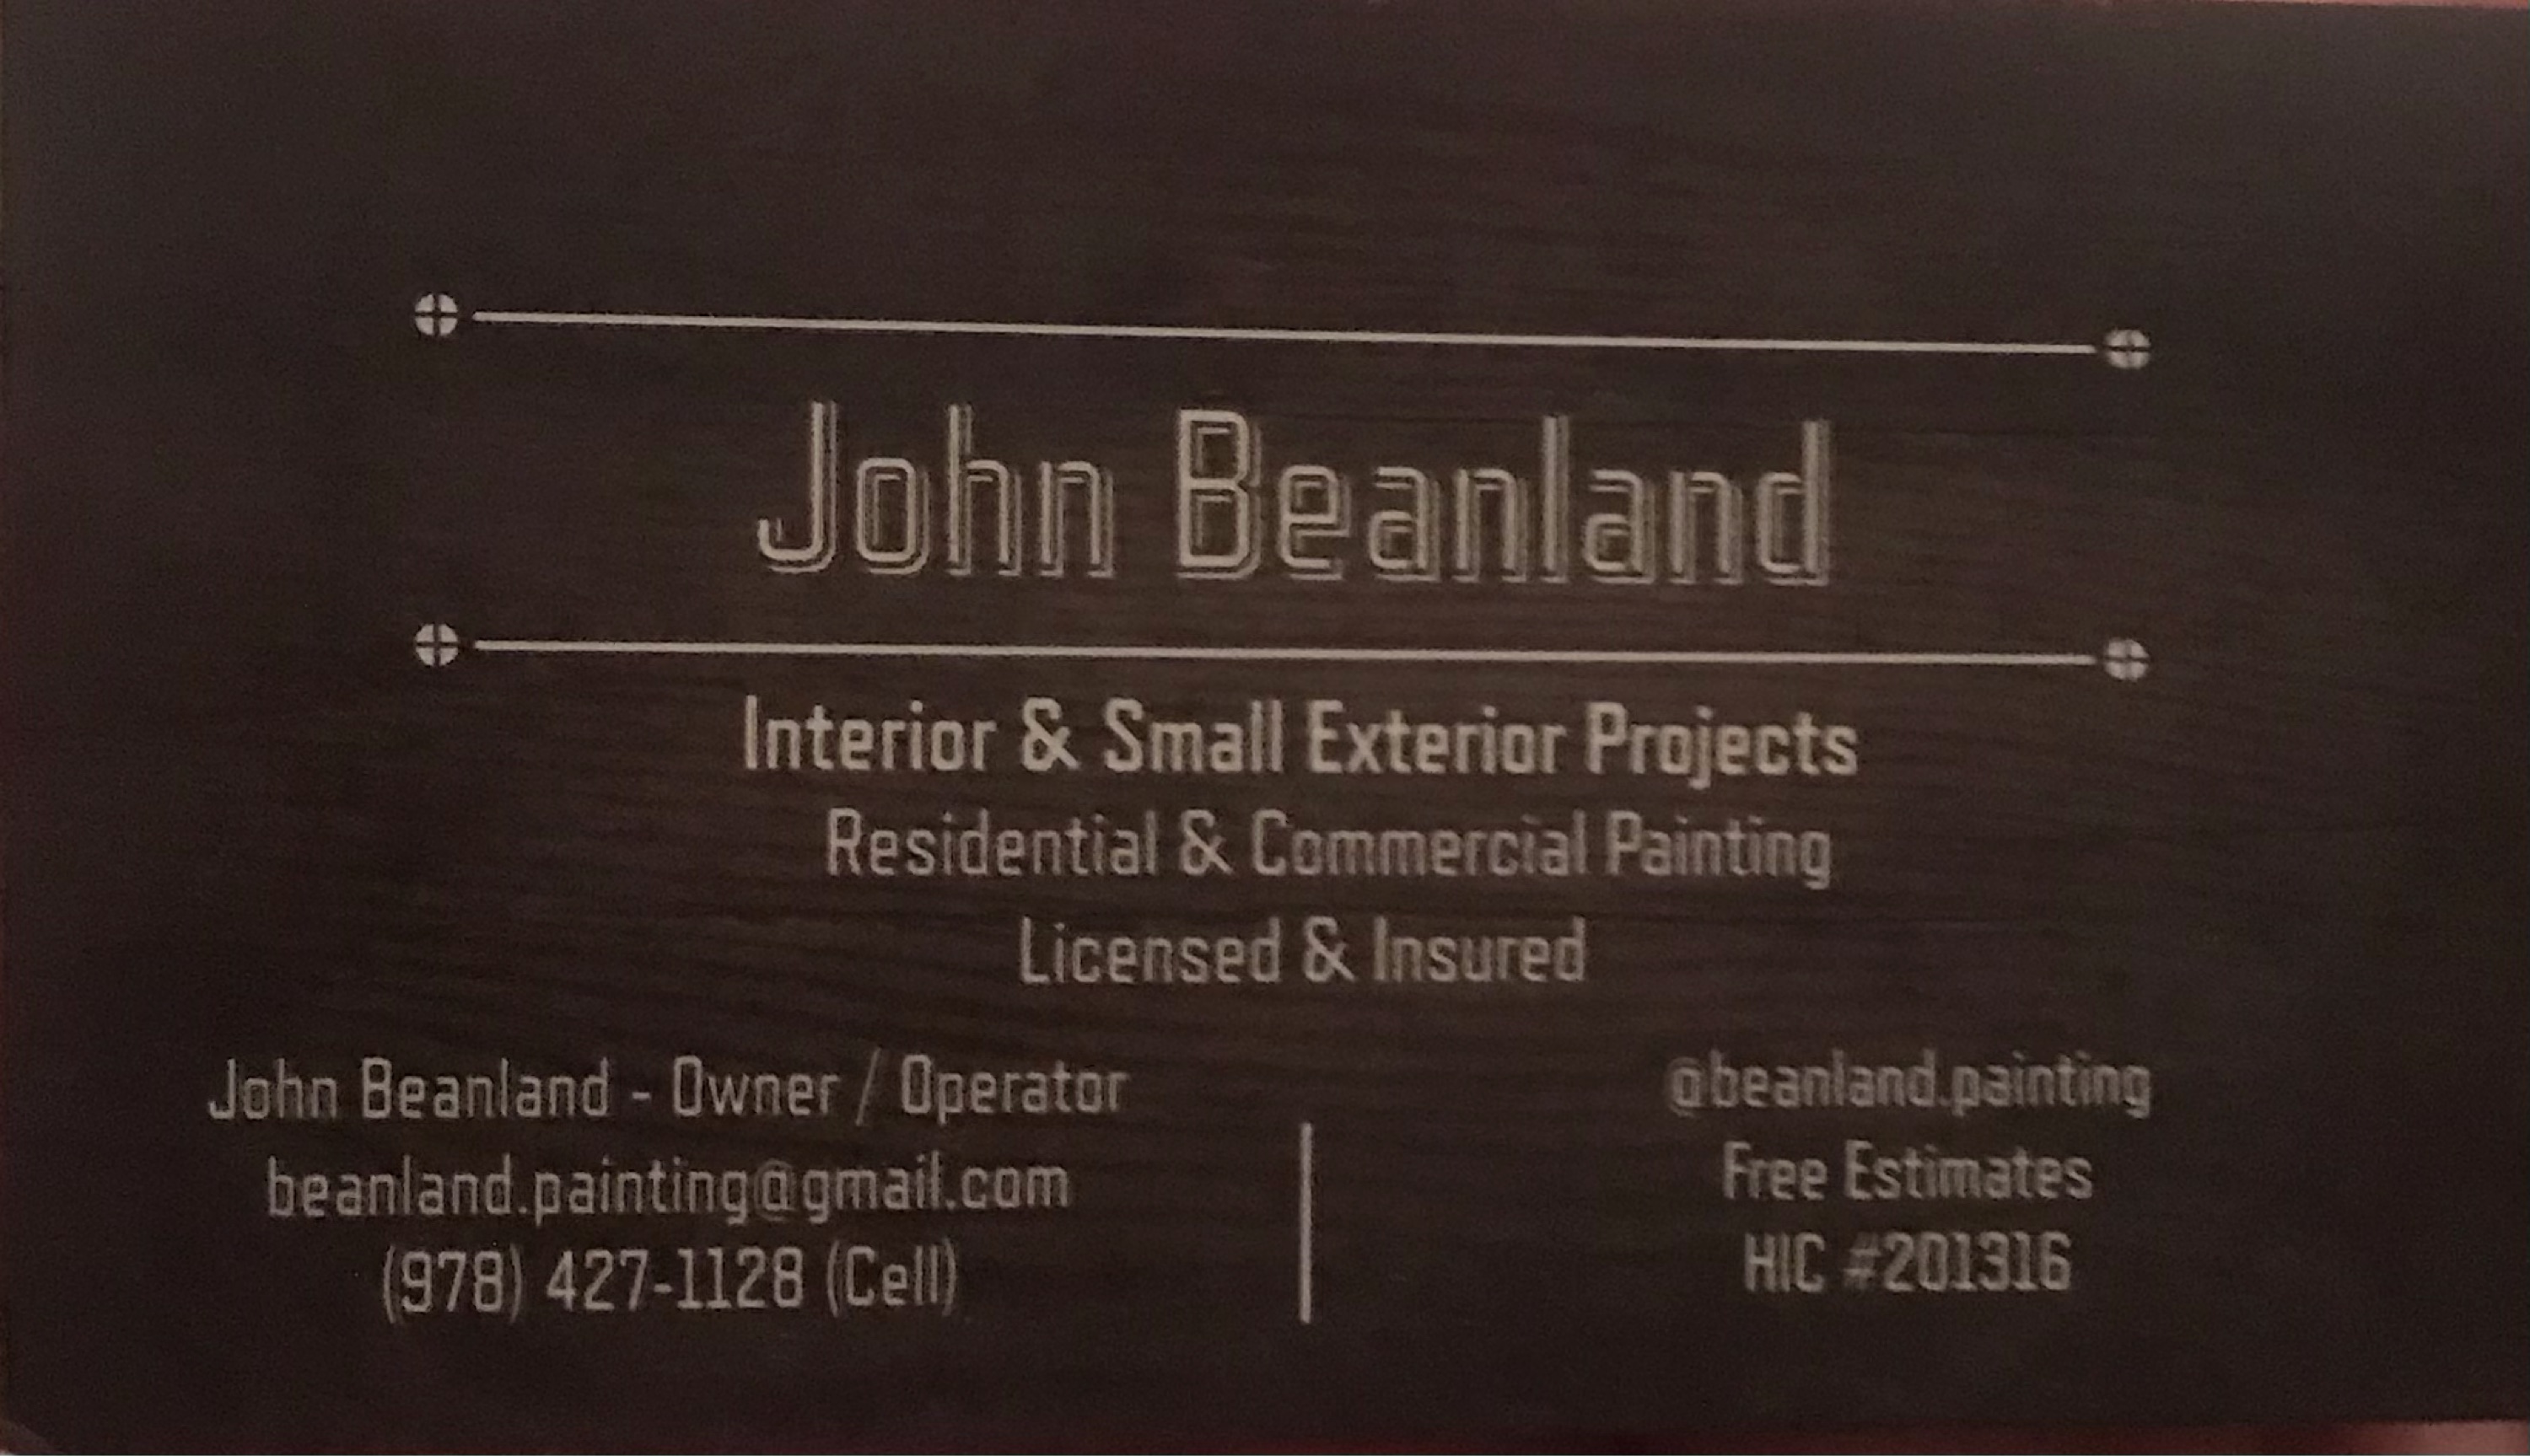 Beanland Painting LLC Logo